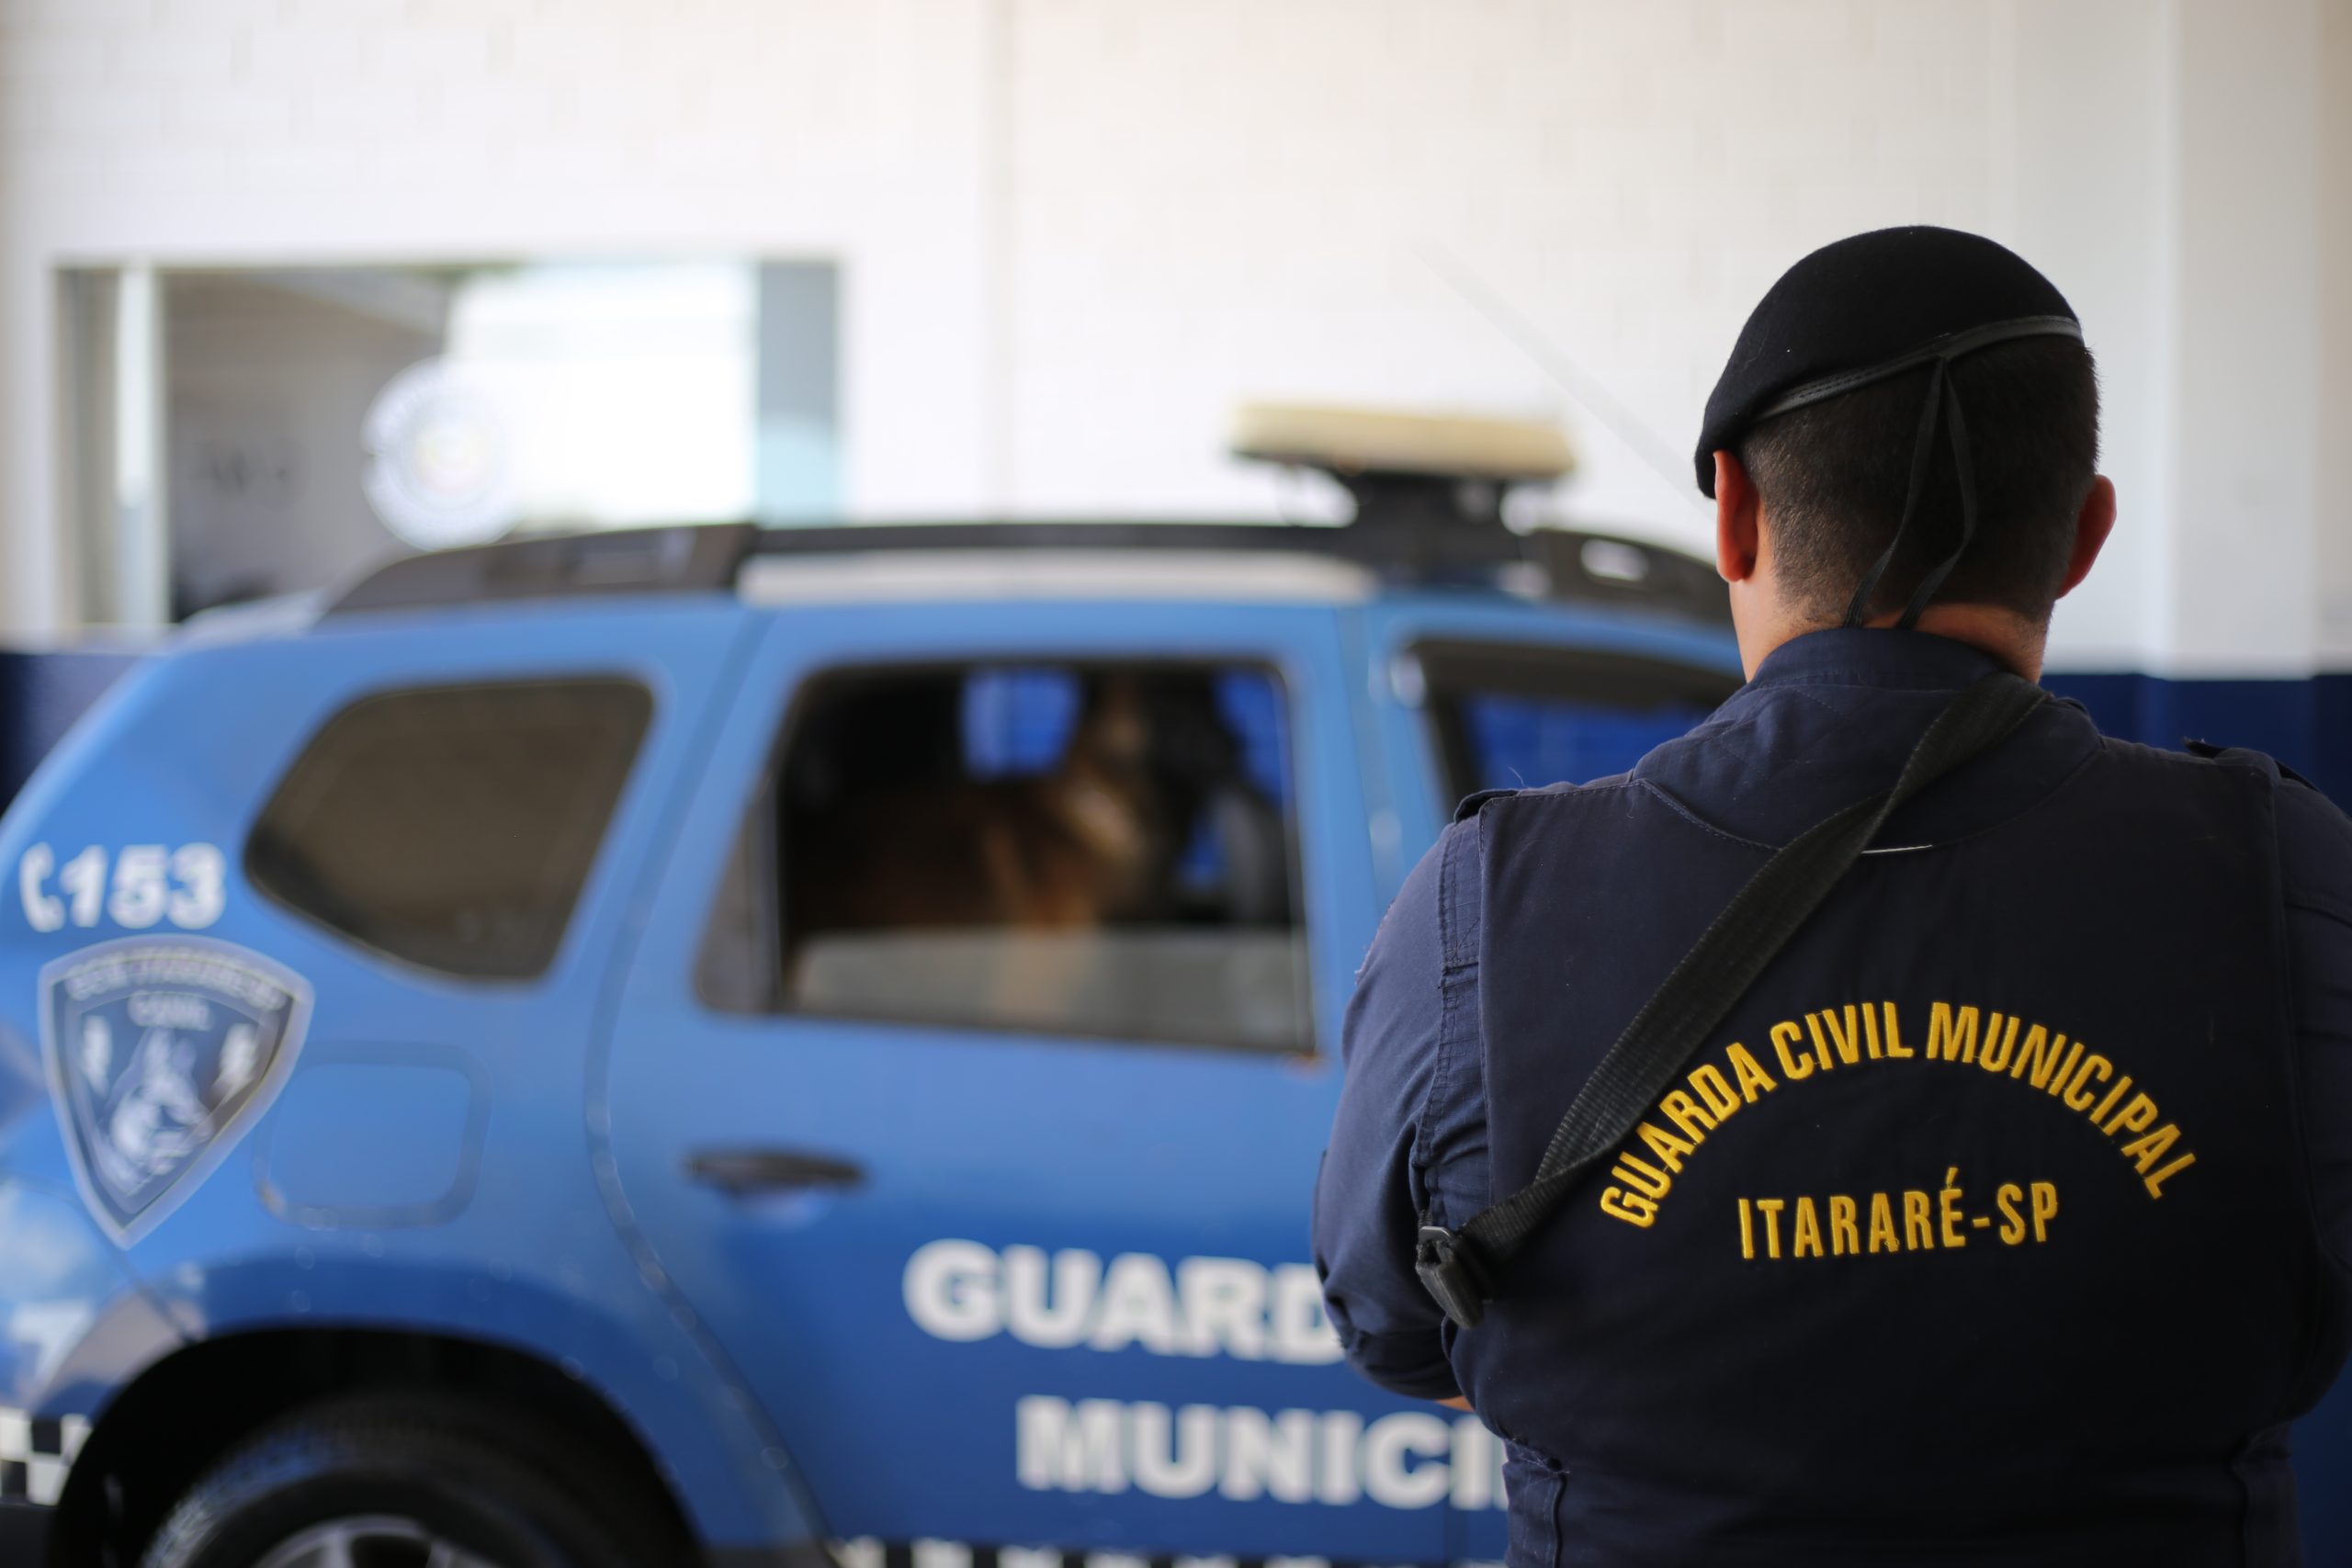 GCM de itararé (SP) prende indivíduo em flagrante por furto de mercadorias